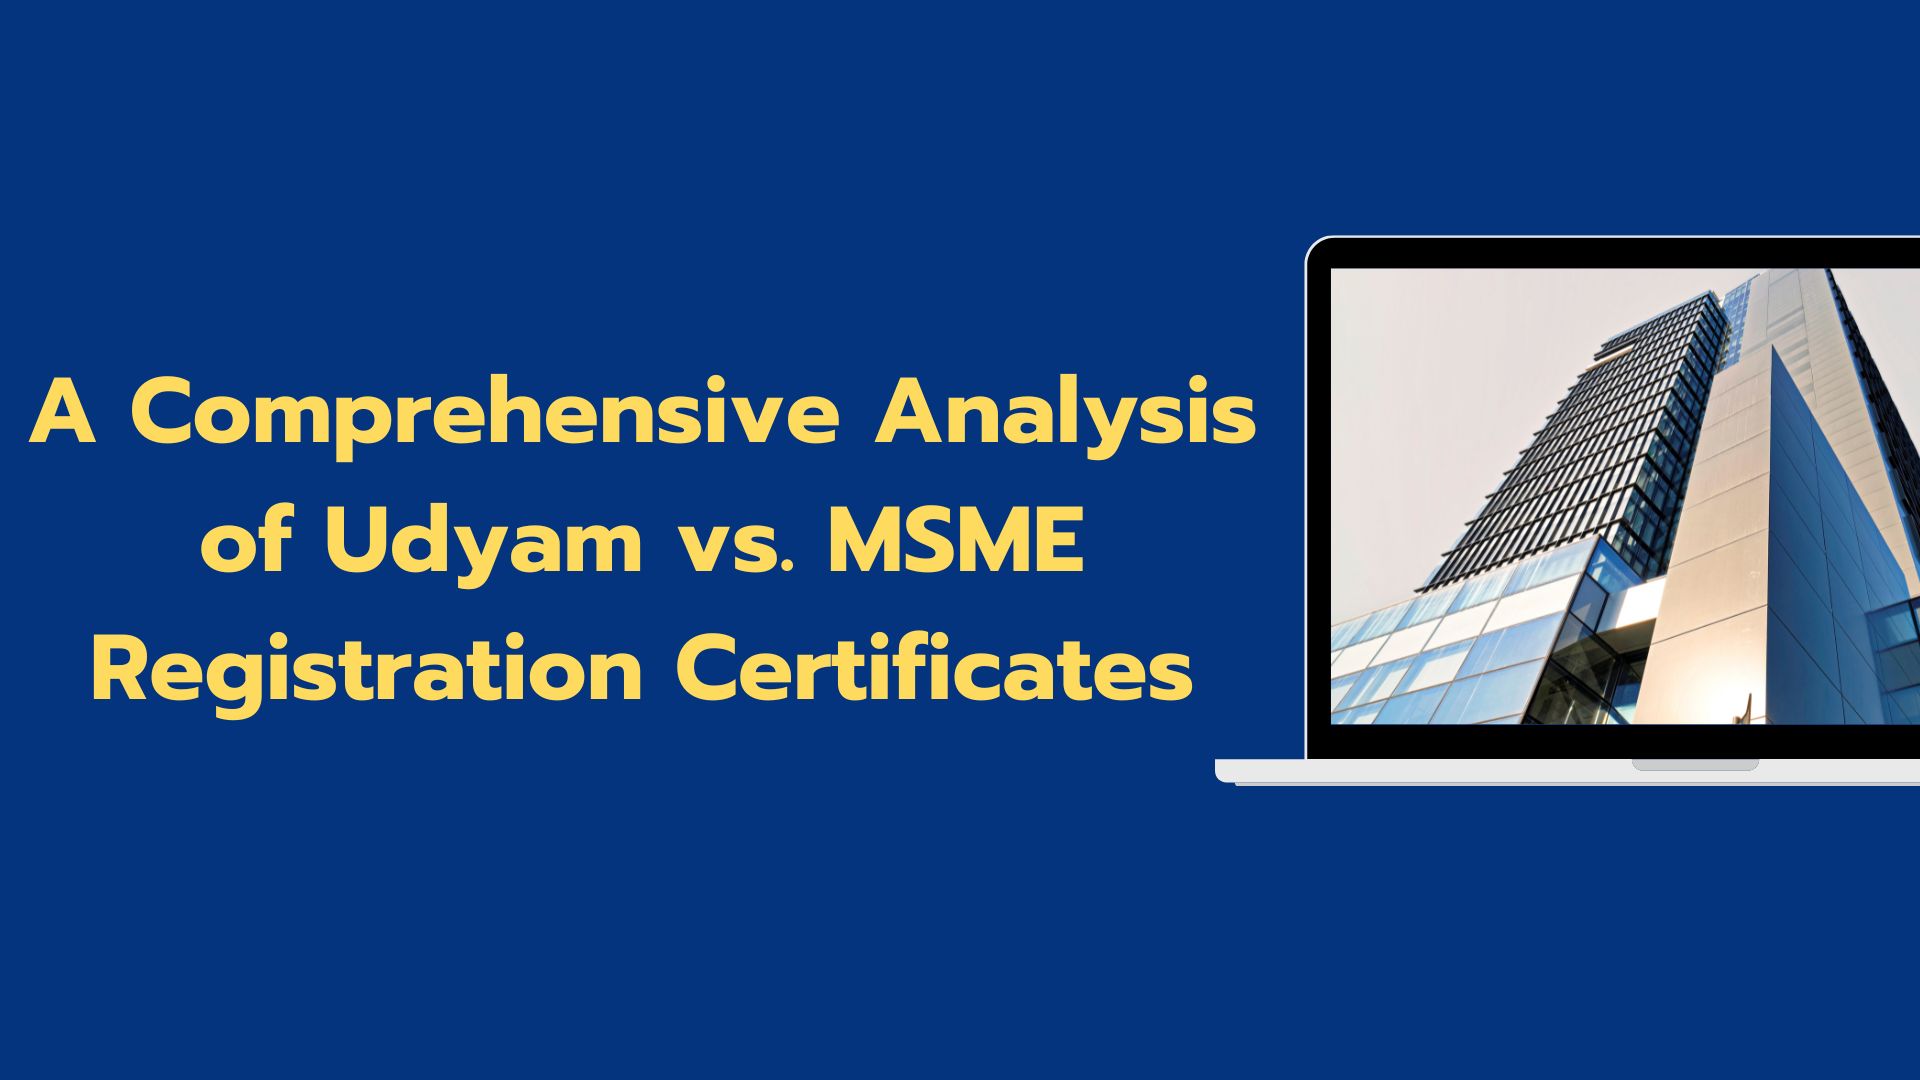 A Comprehensive Analysis of Udyam vs. MSME Registration Certificates